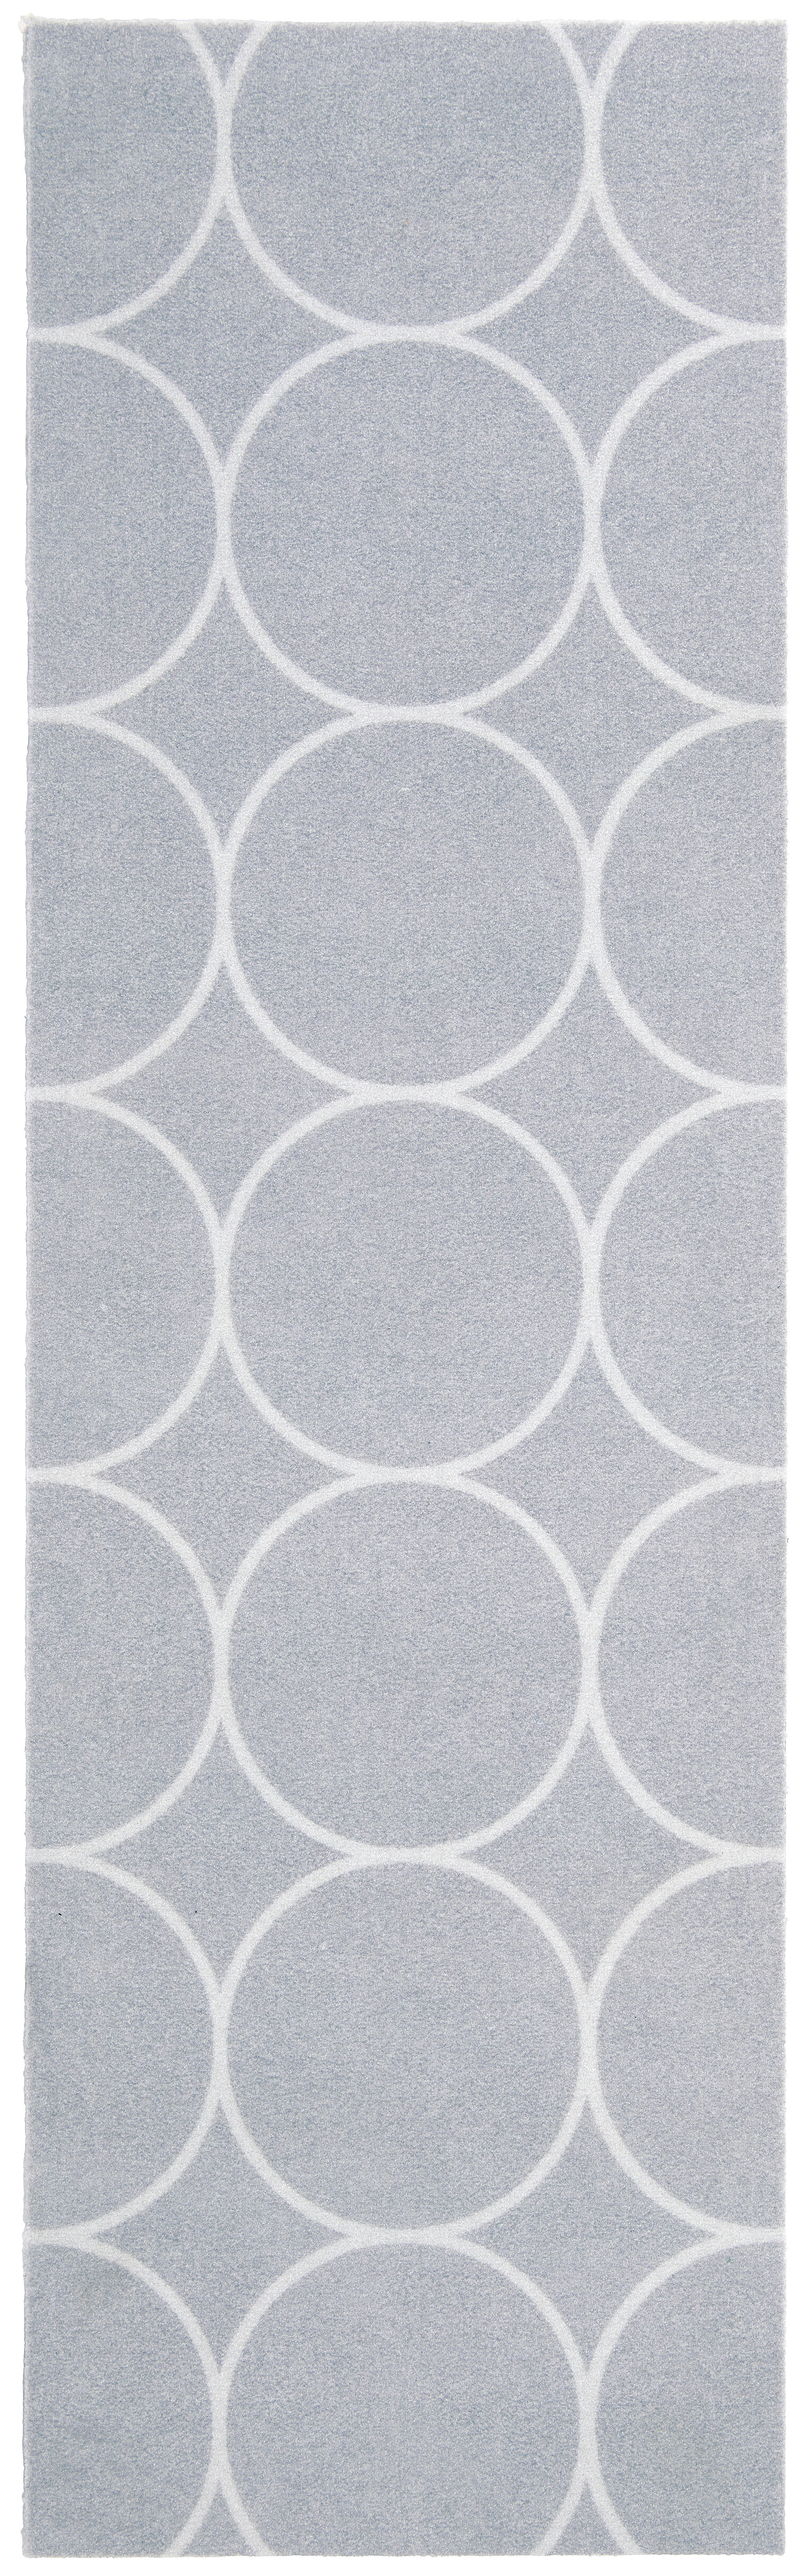 LÄUFER 60/150 cm Circle  - Grau, KONVENTIONELL, Kunststoff/Textil (60/150cm) - Esposa